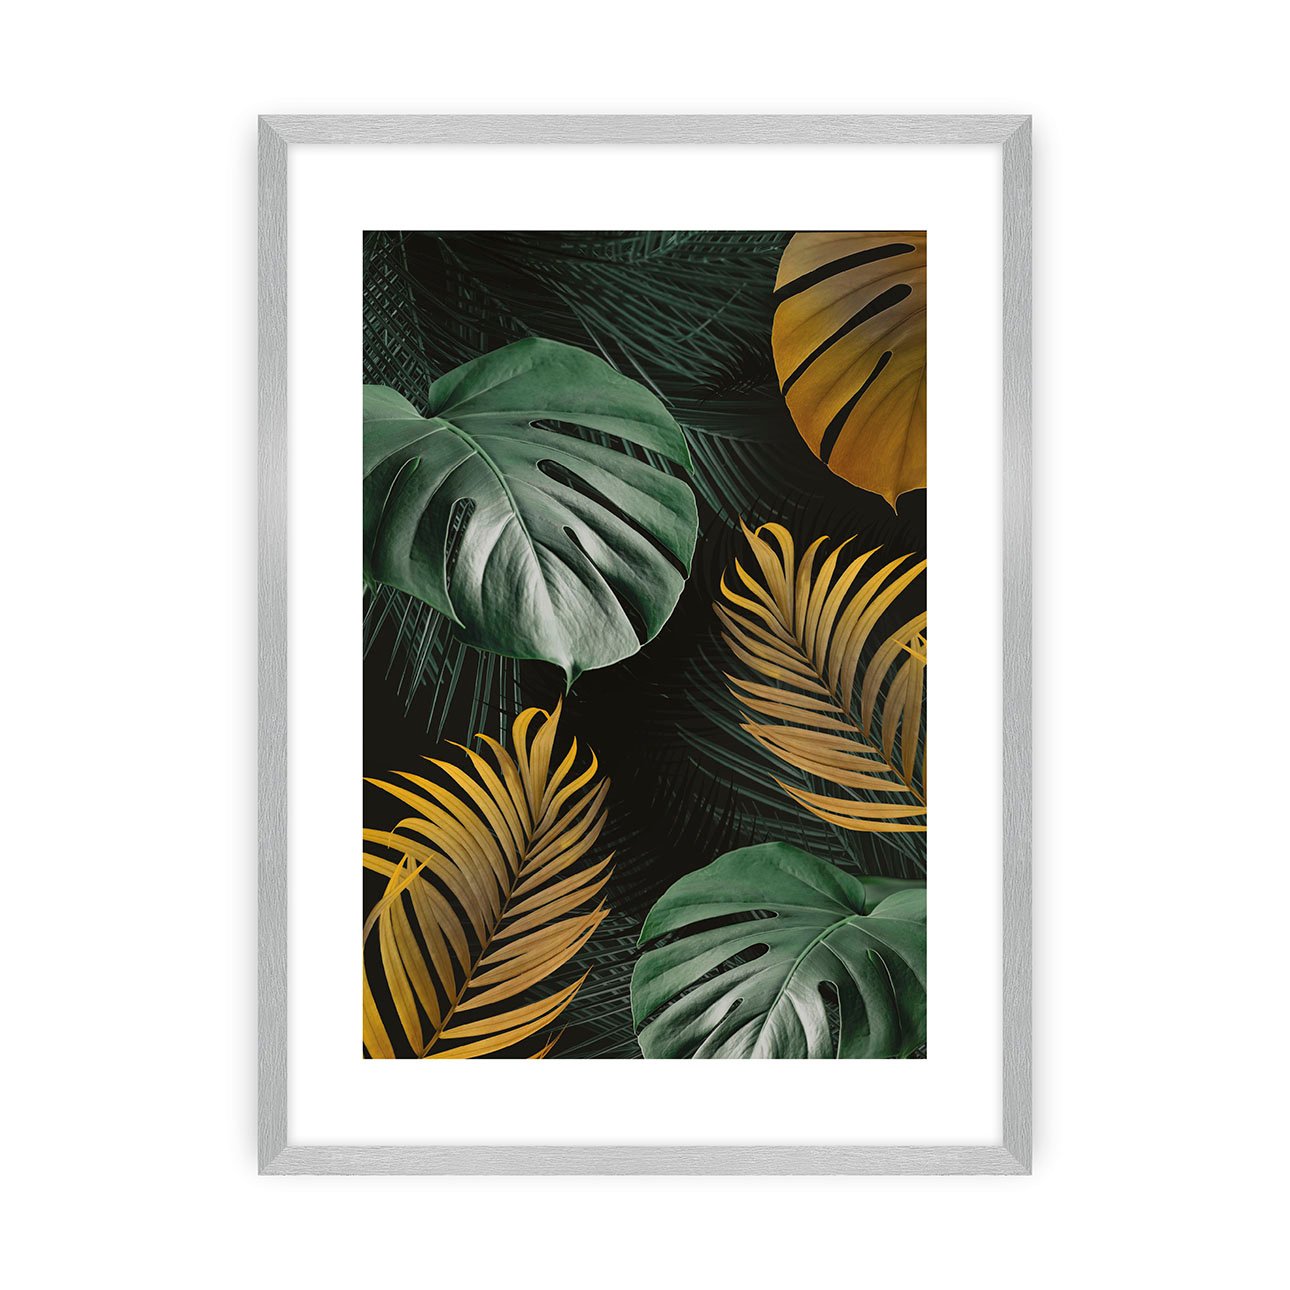 Dekoria Plakát Golden Leaves I, 70 x 100 cm, Zvolit rámek: Stříbrný